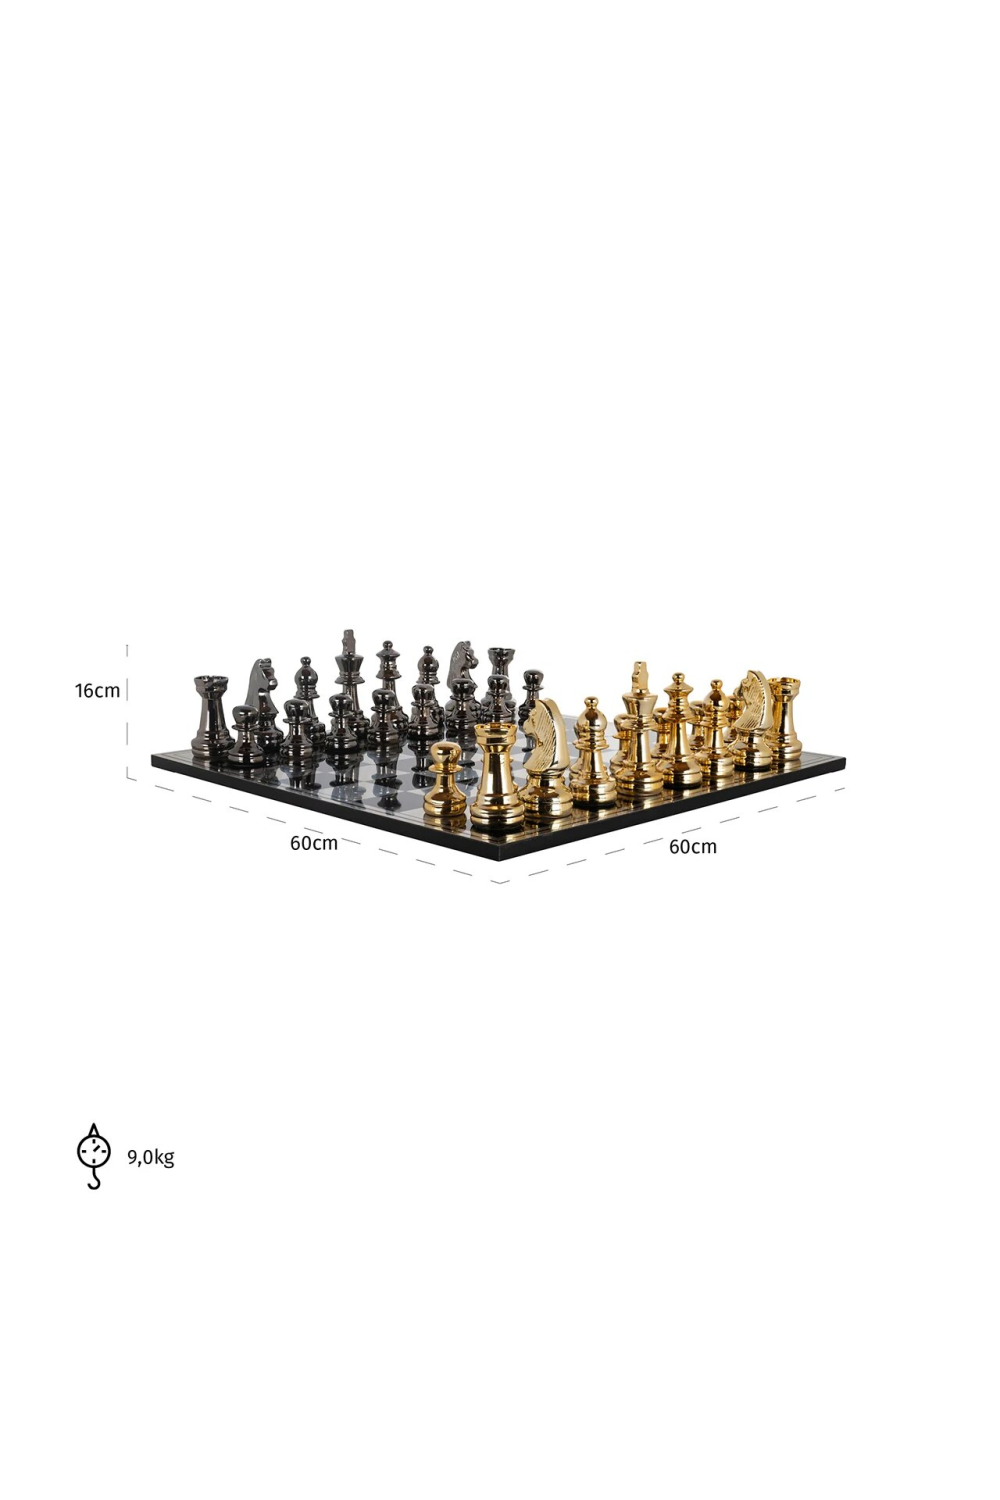 Modern Classic Chessboard | OROA Saray | OROA.com